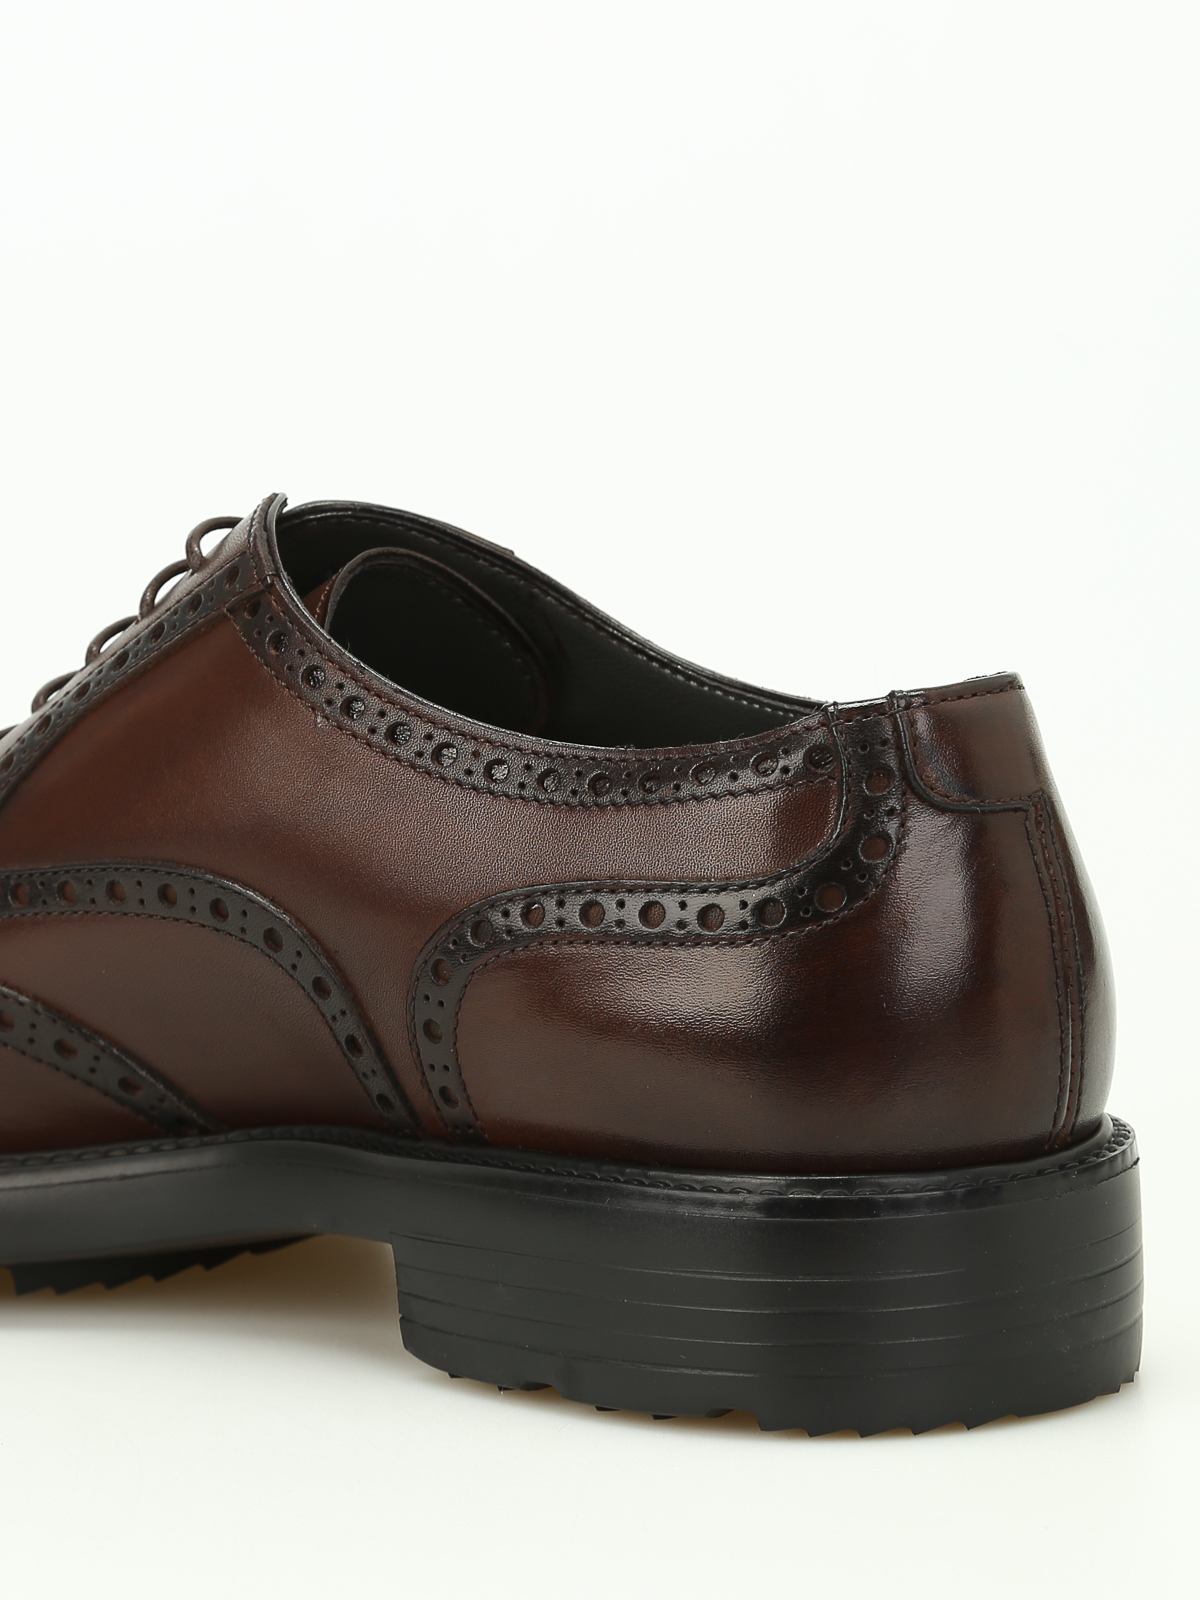 moreschi shoes online